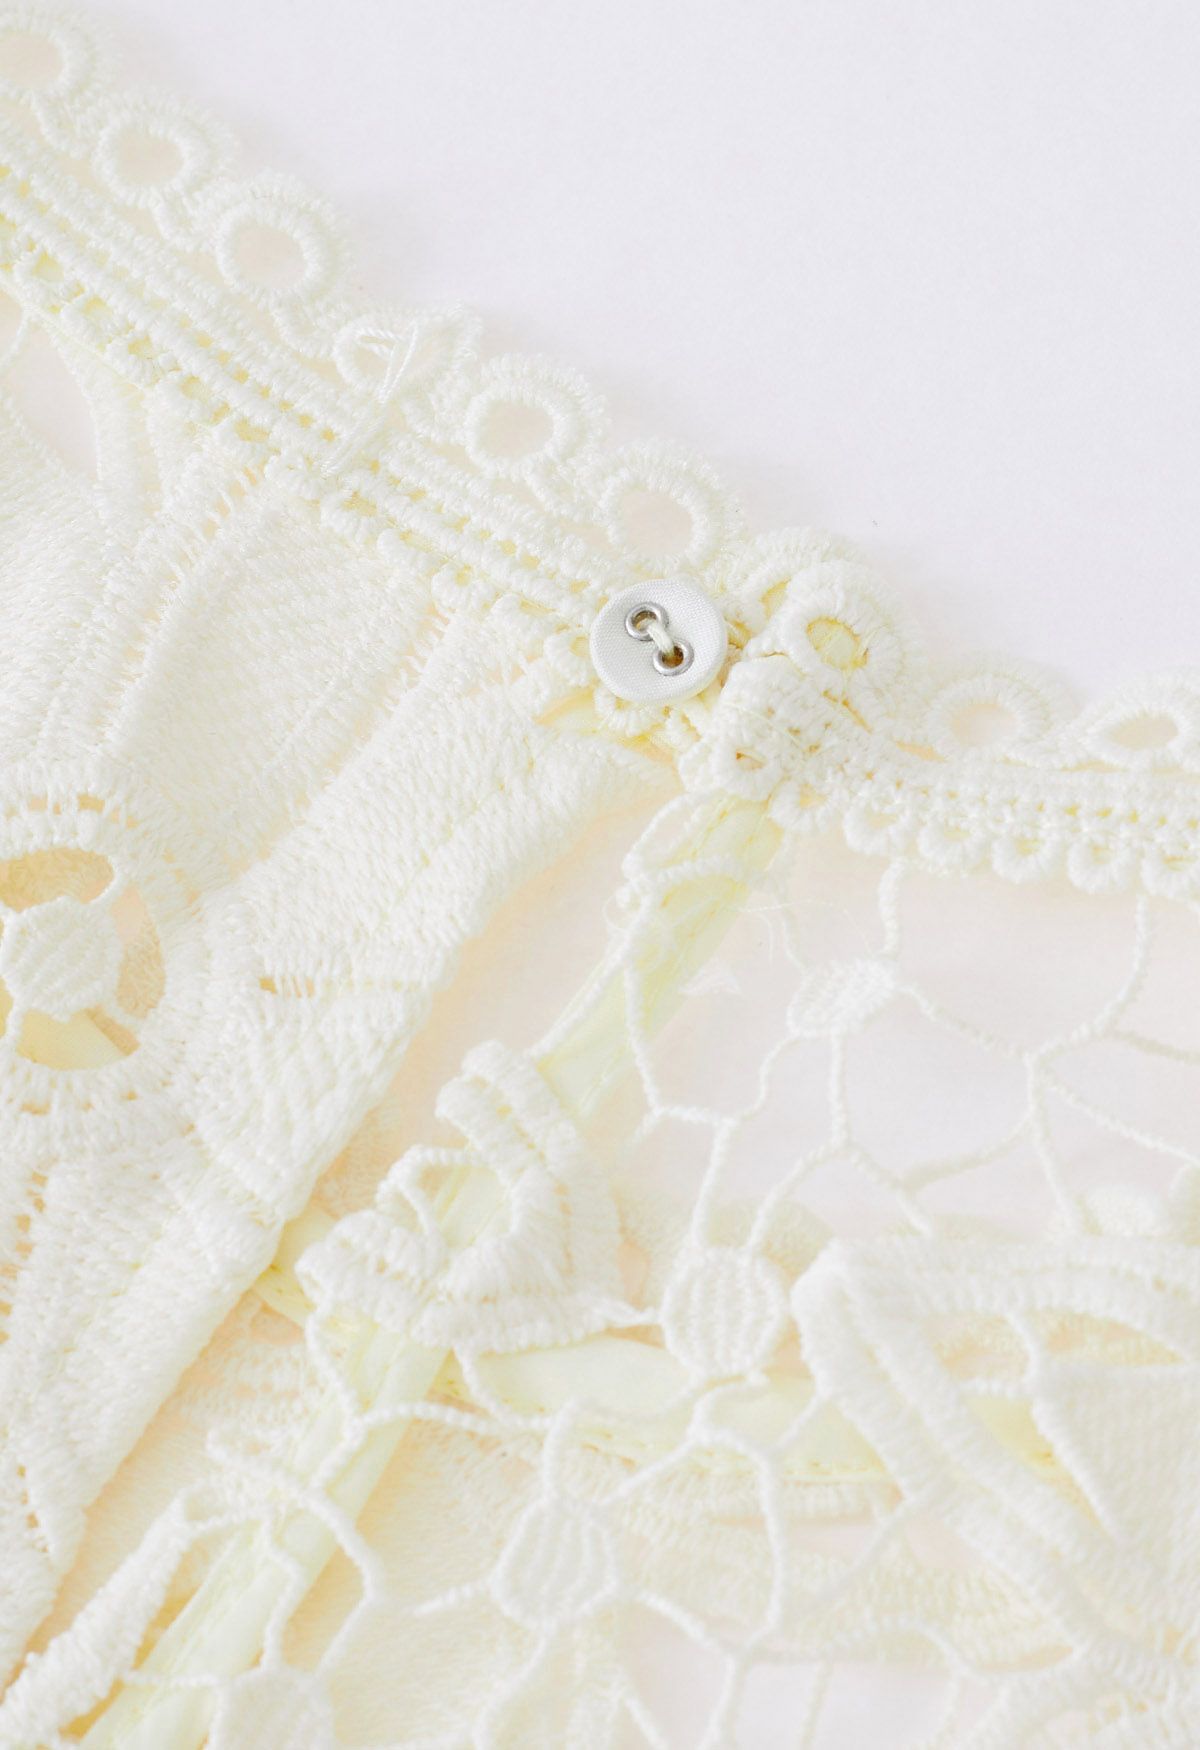 Flower Pattern Crochet Lace Flare Sleeves Top in Cream